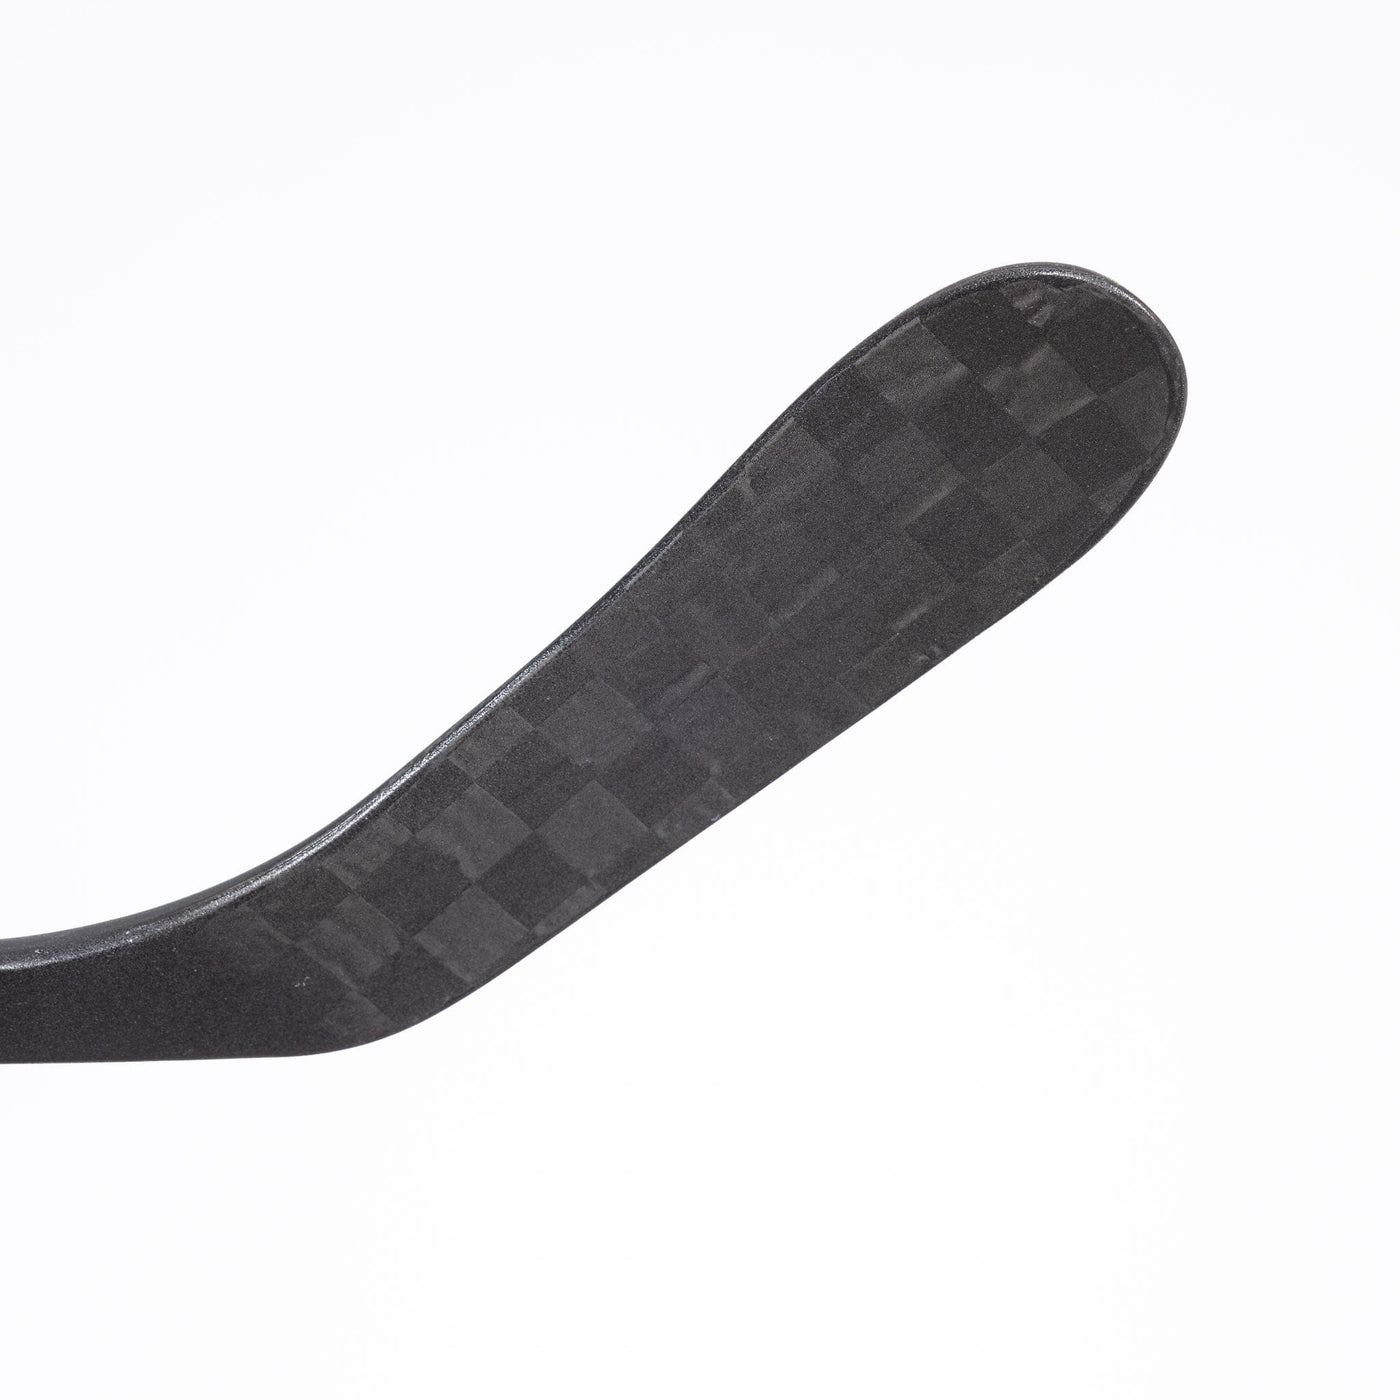 TRUE Catalyst Pro Intermediate Hockey Stick - The Hockey Shop Source For Sports